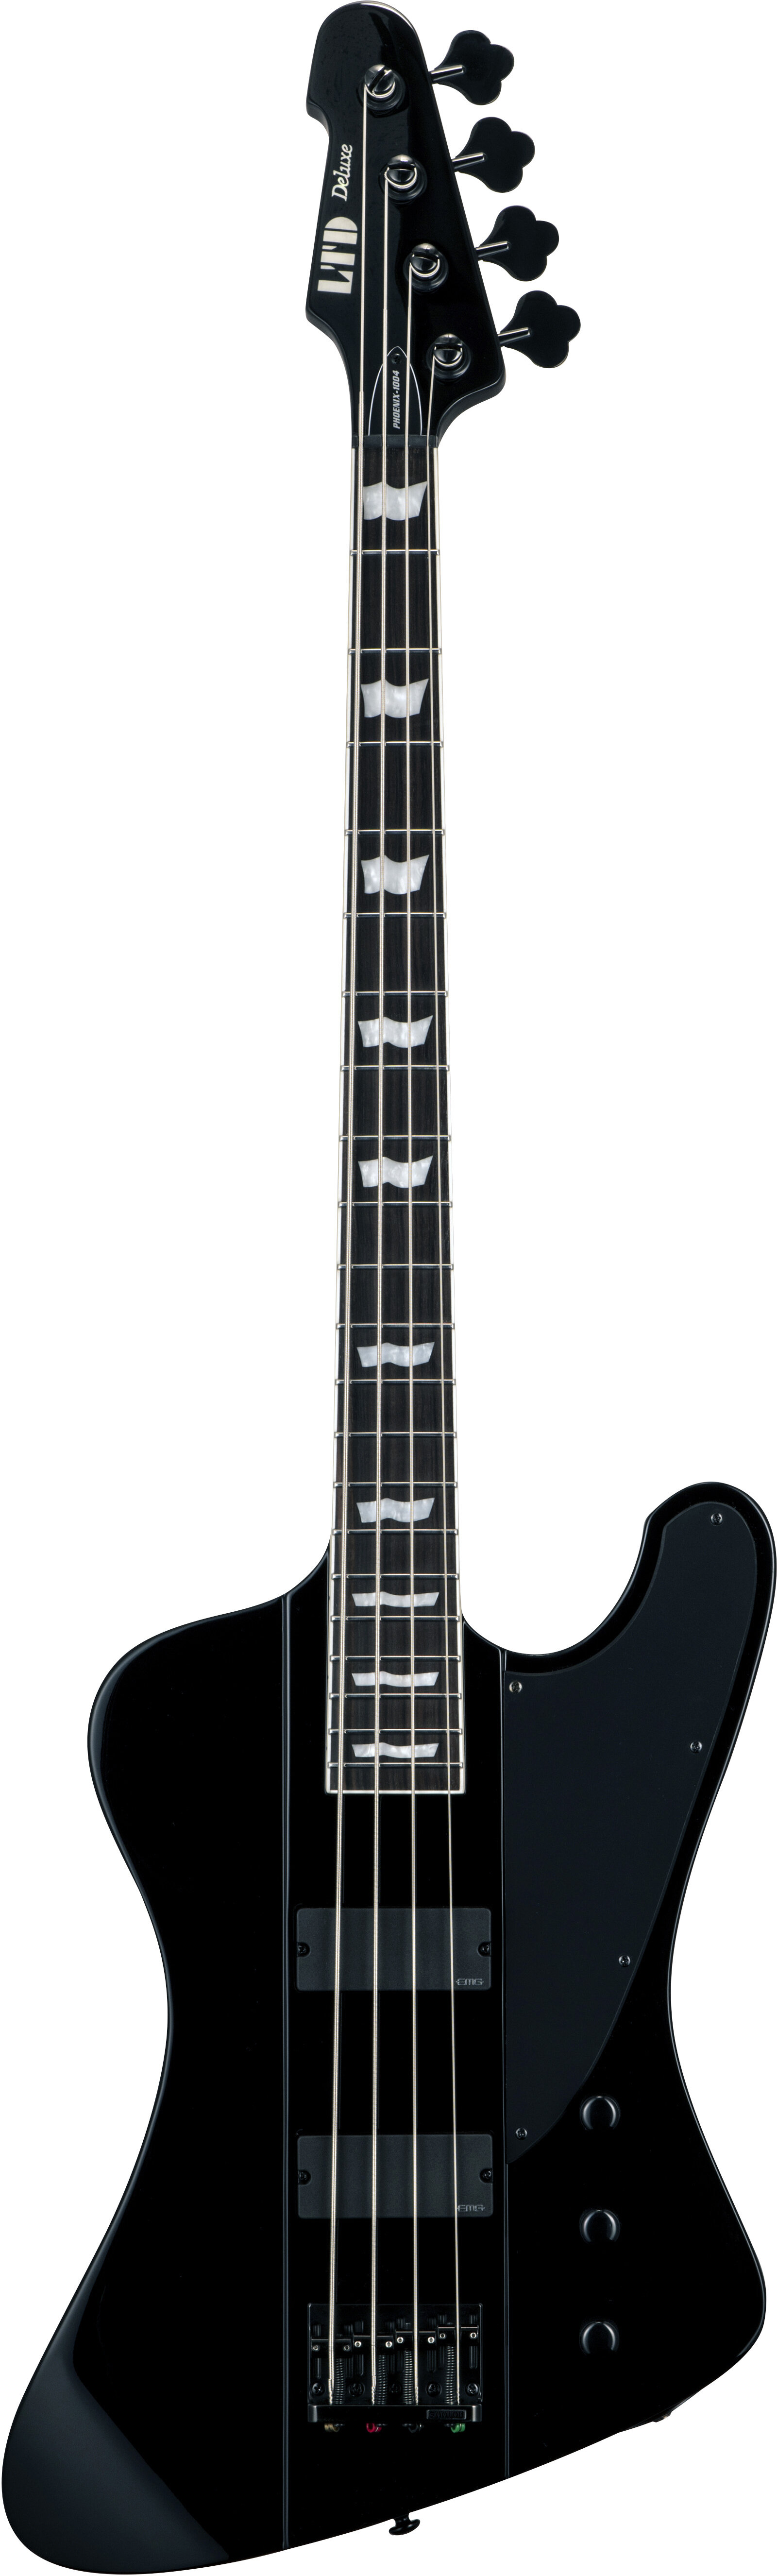 ESP LTD Phoenix-1004 Bass Black -  LPHOENIX1004BLK